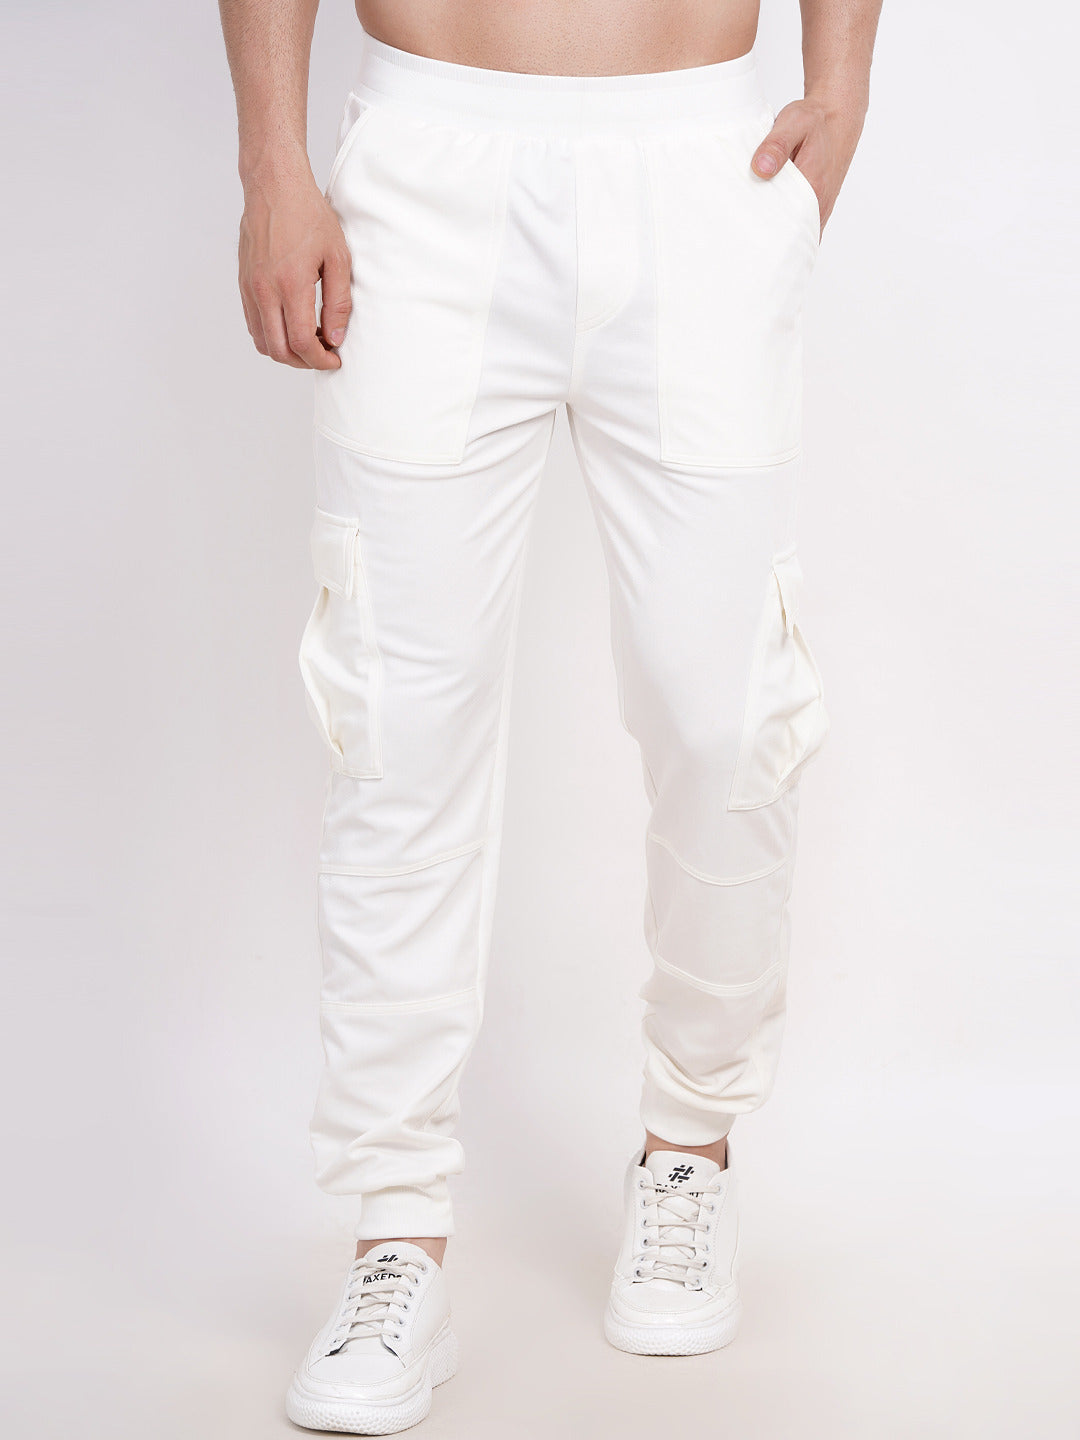 Cotton Yoga Pants – Off White and White – Yoga Rudra